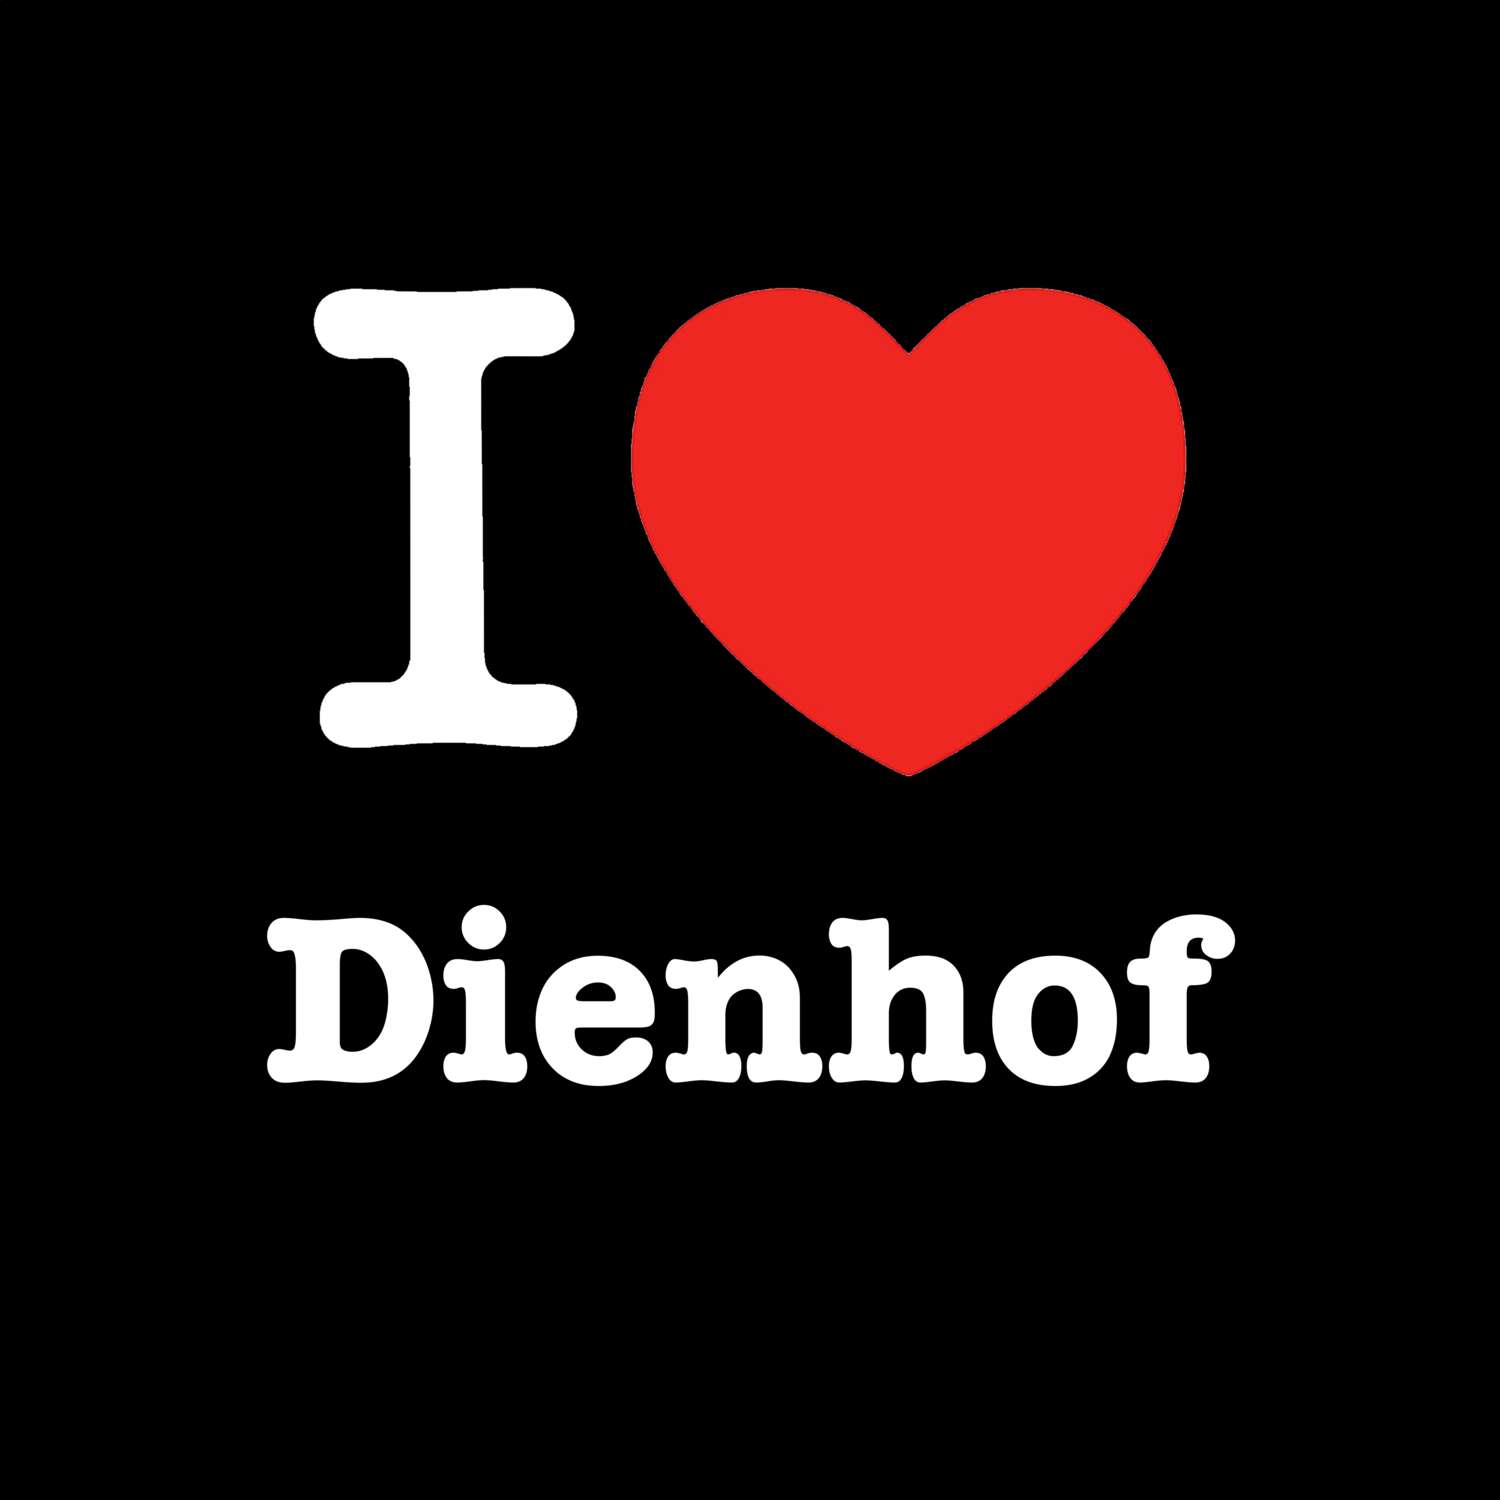 Dienhof T-Shirt »I love«